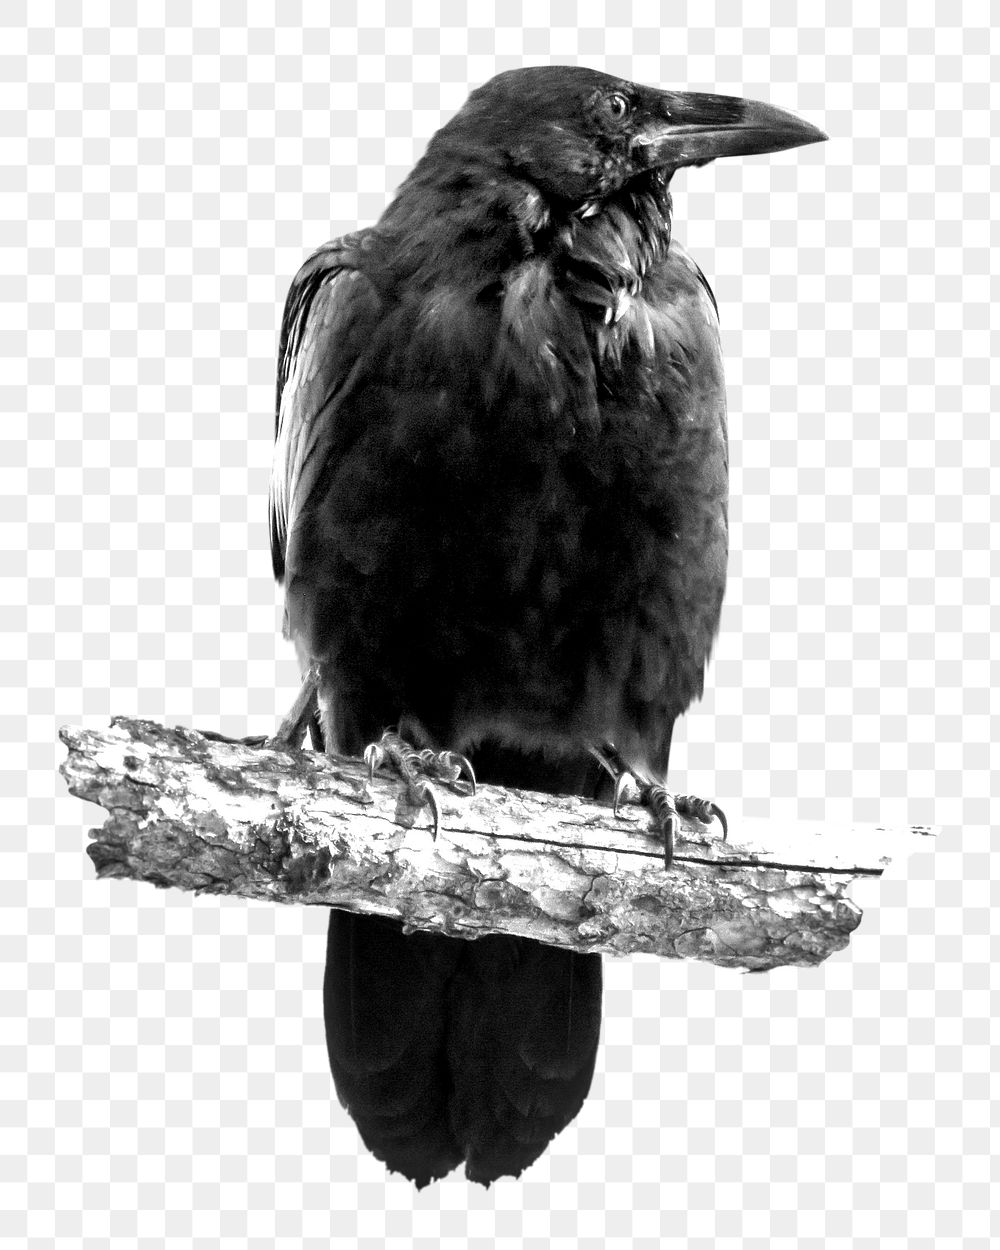 Black crow png, transparent background